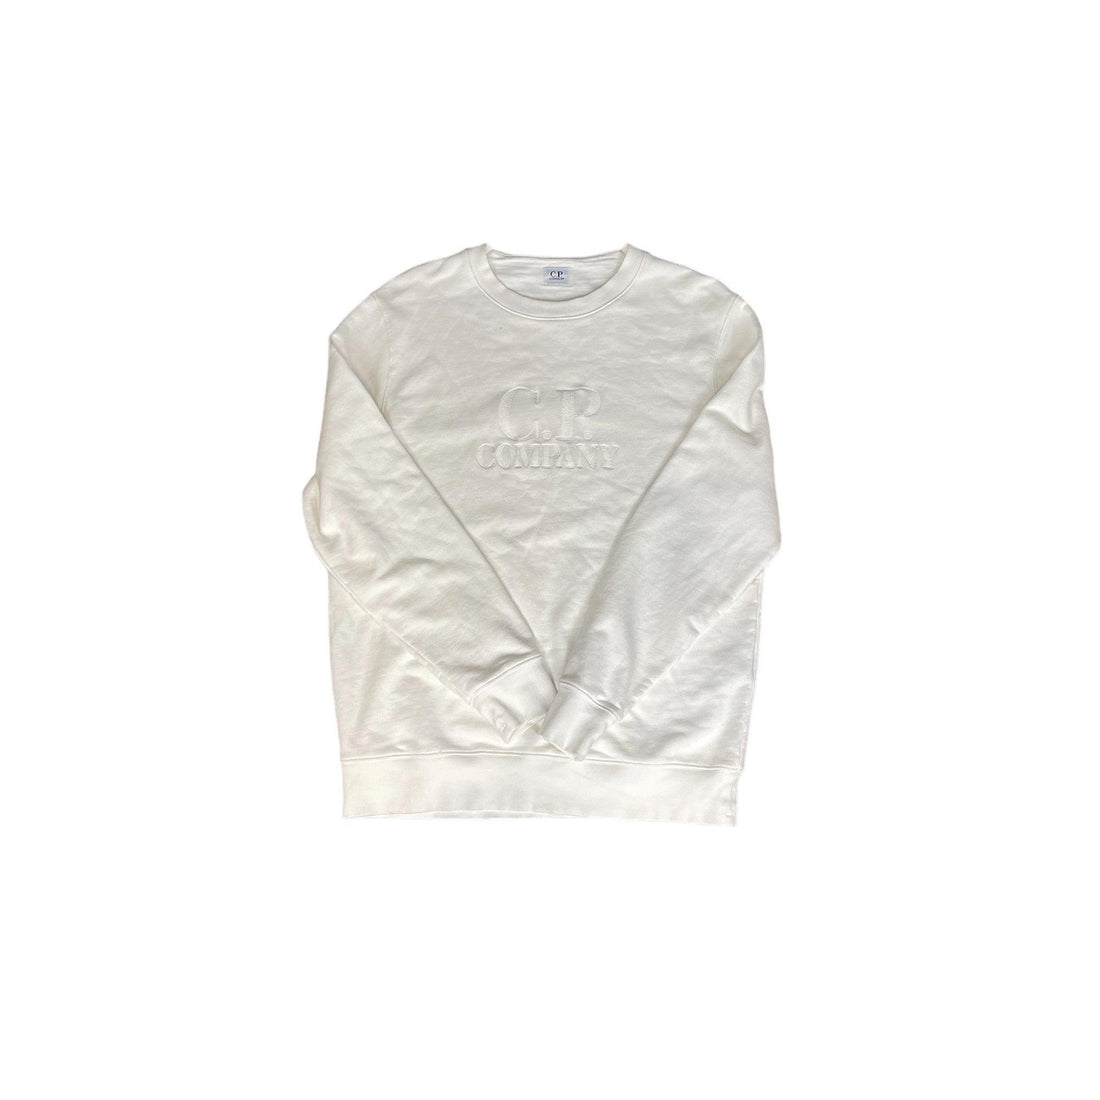 Vintage White CP Company Sweatshirt - Large - The Streetwear Studio